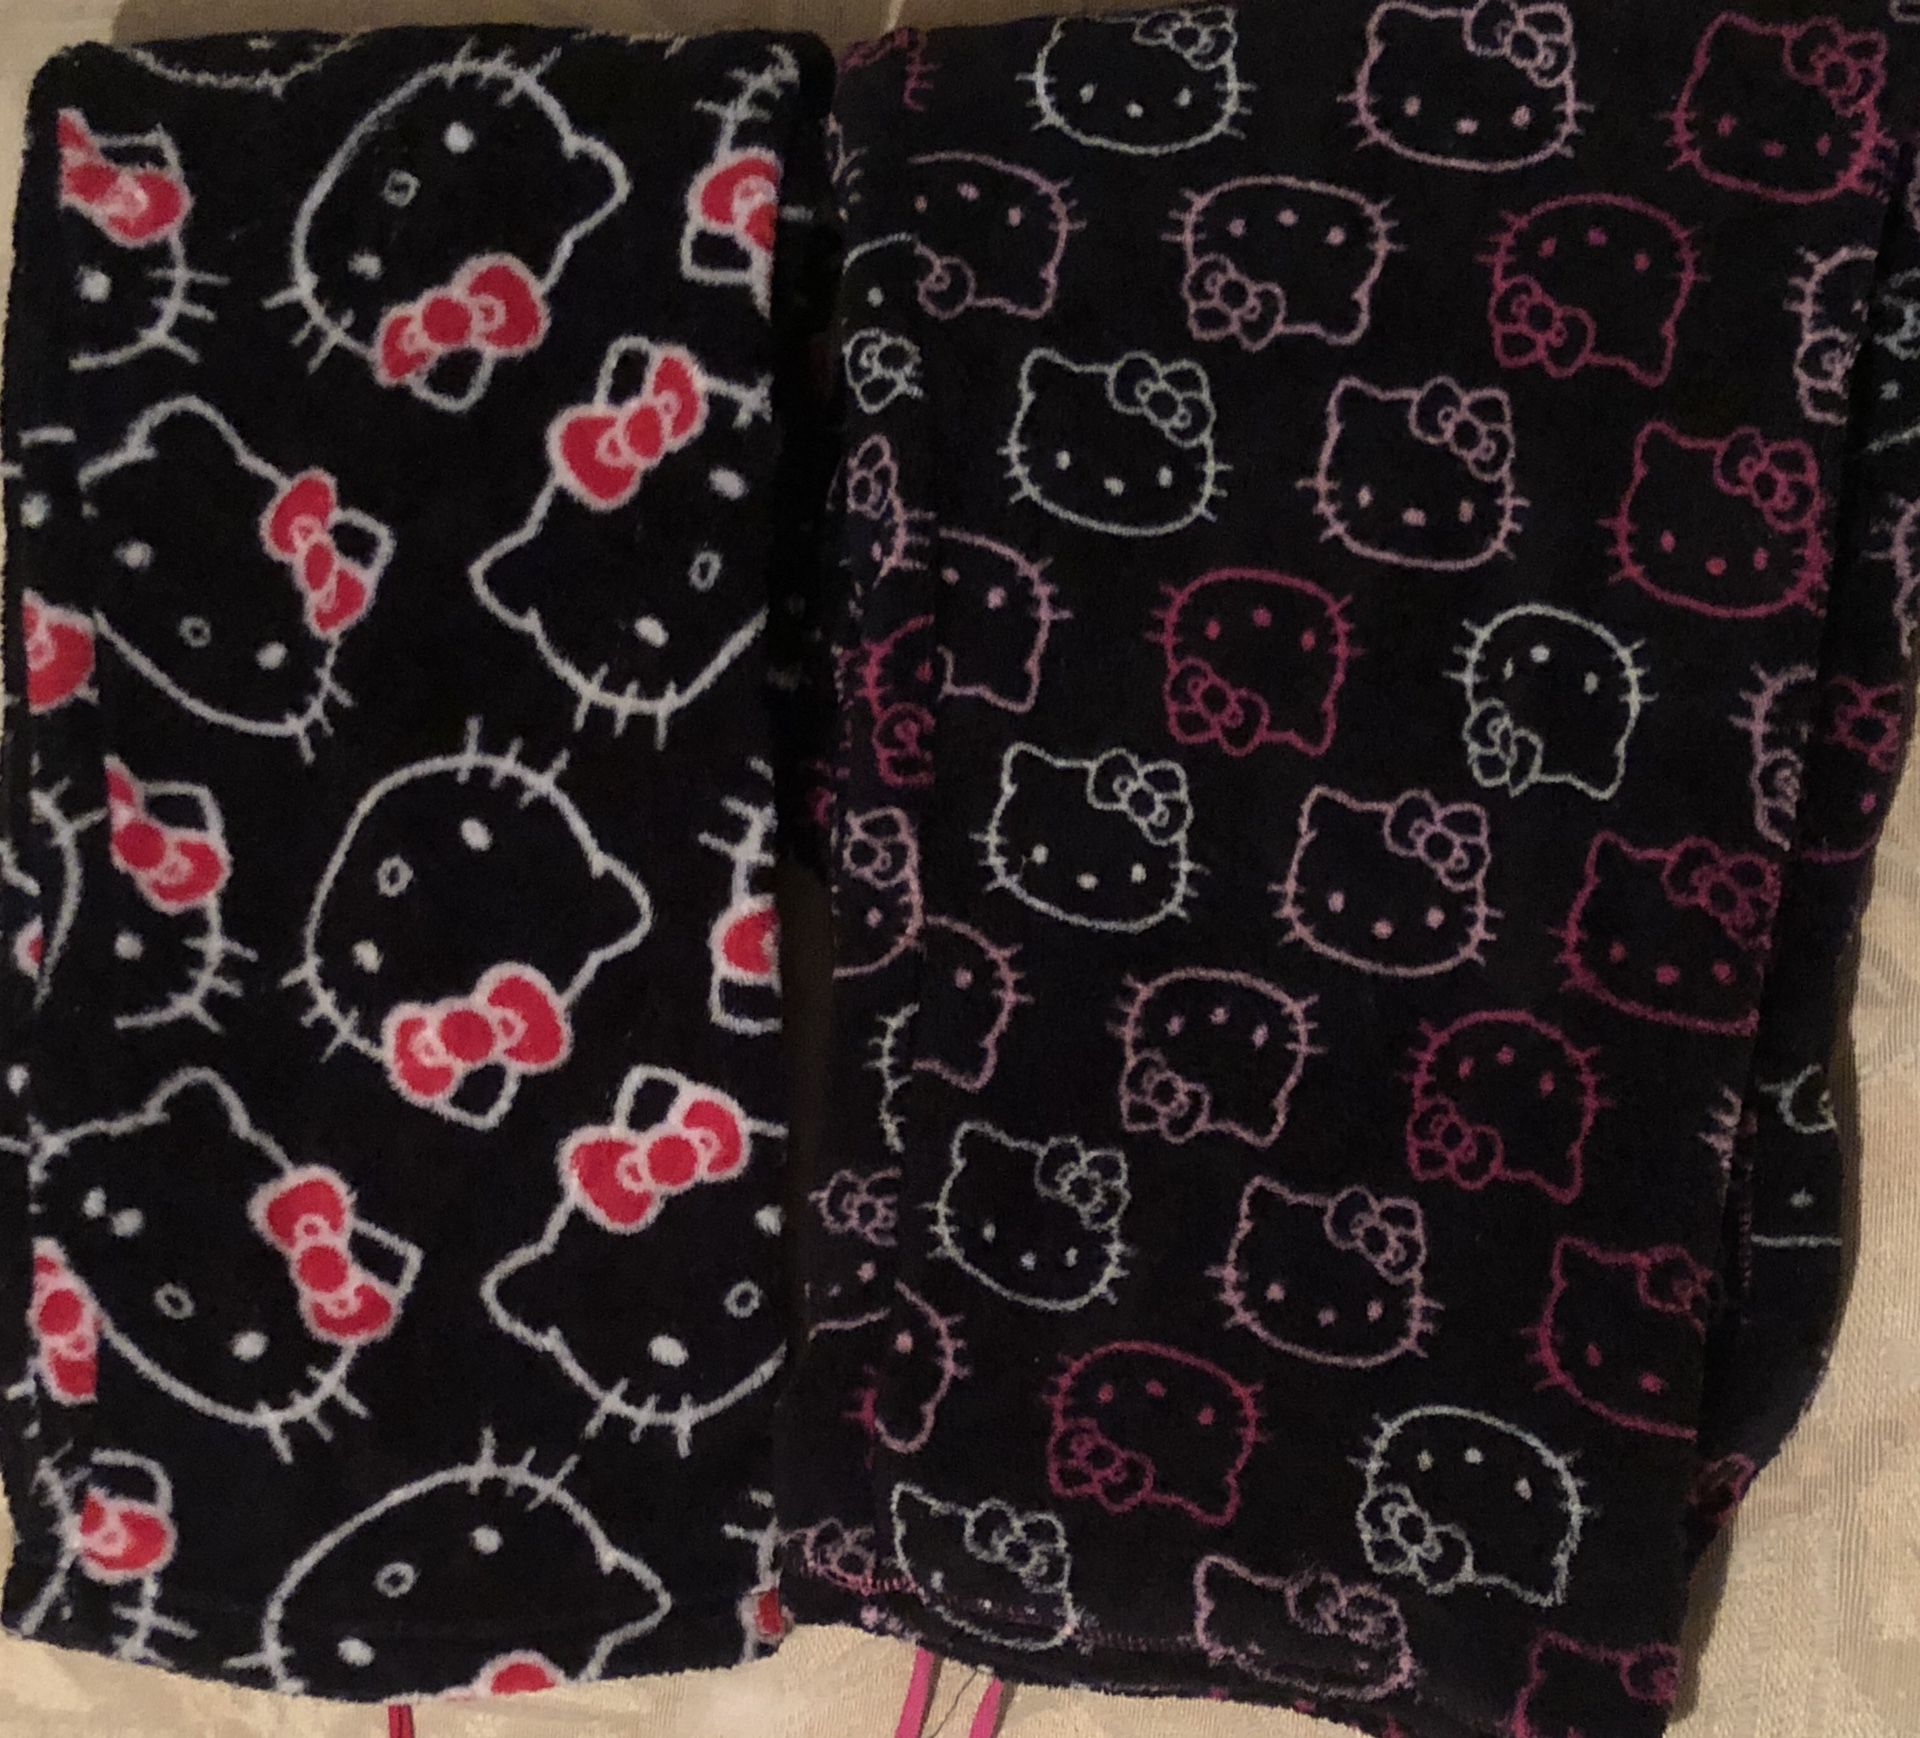 Two Hello Kitty Super Soft Sleep Pants - Size